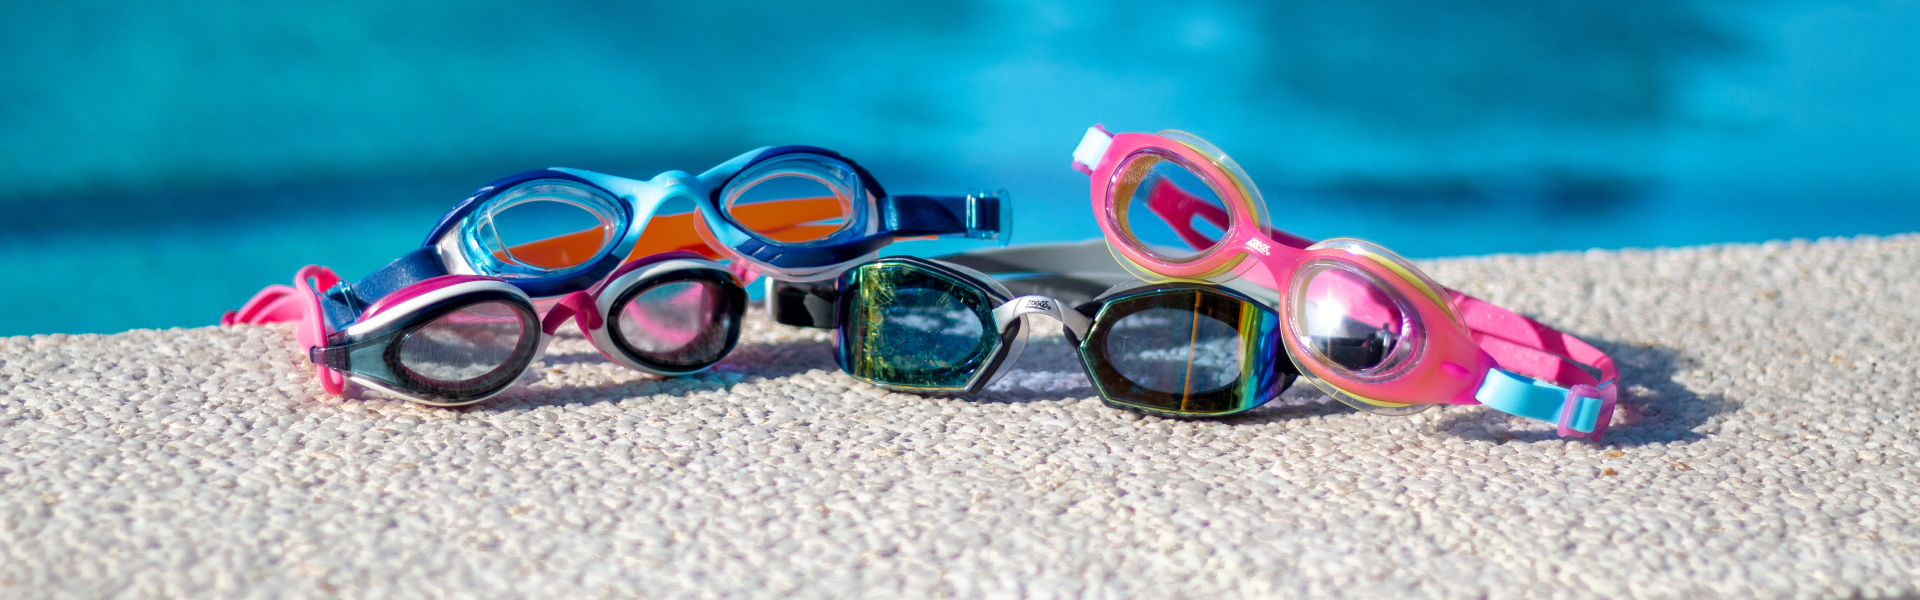 Product Spotlight: NEW Little Comet Kids Goggles